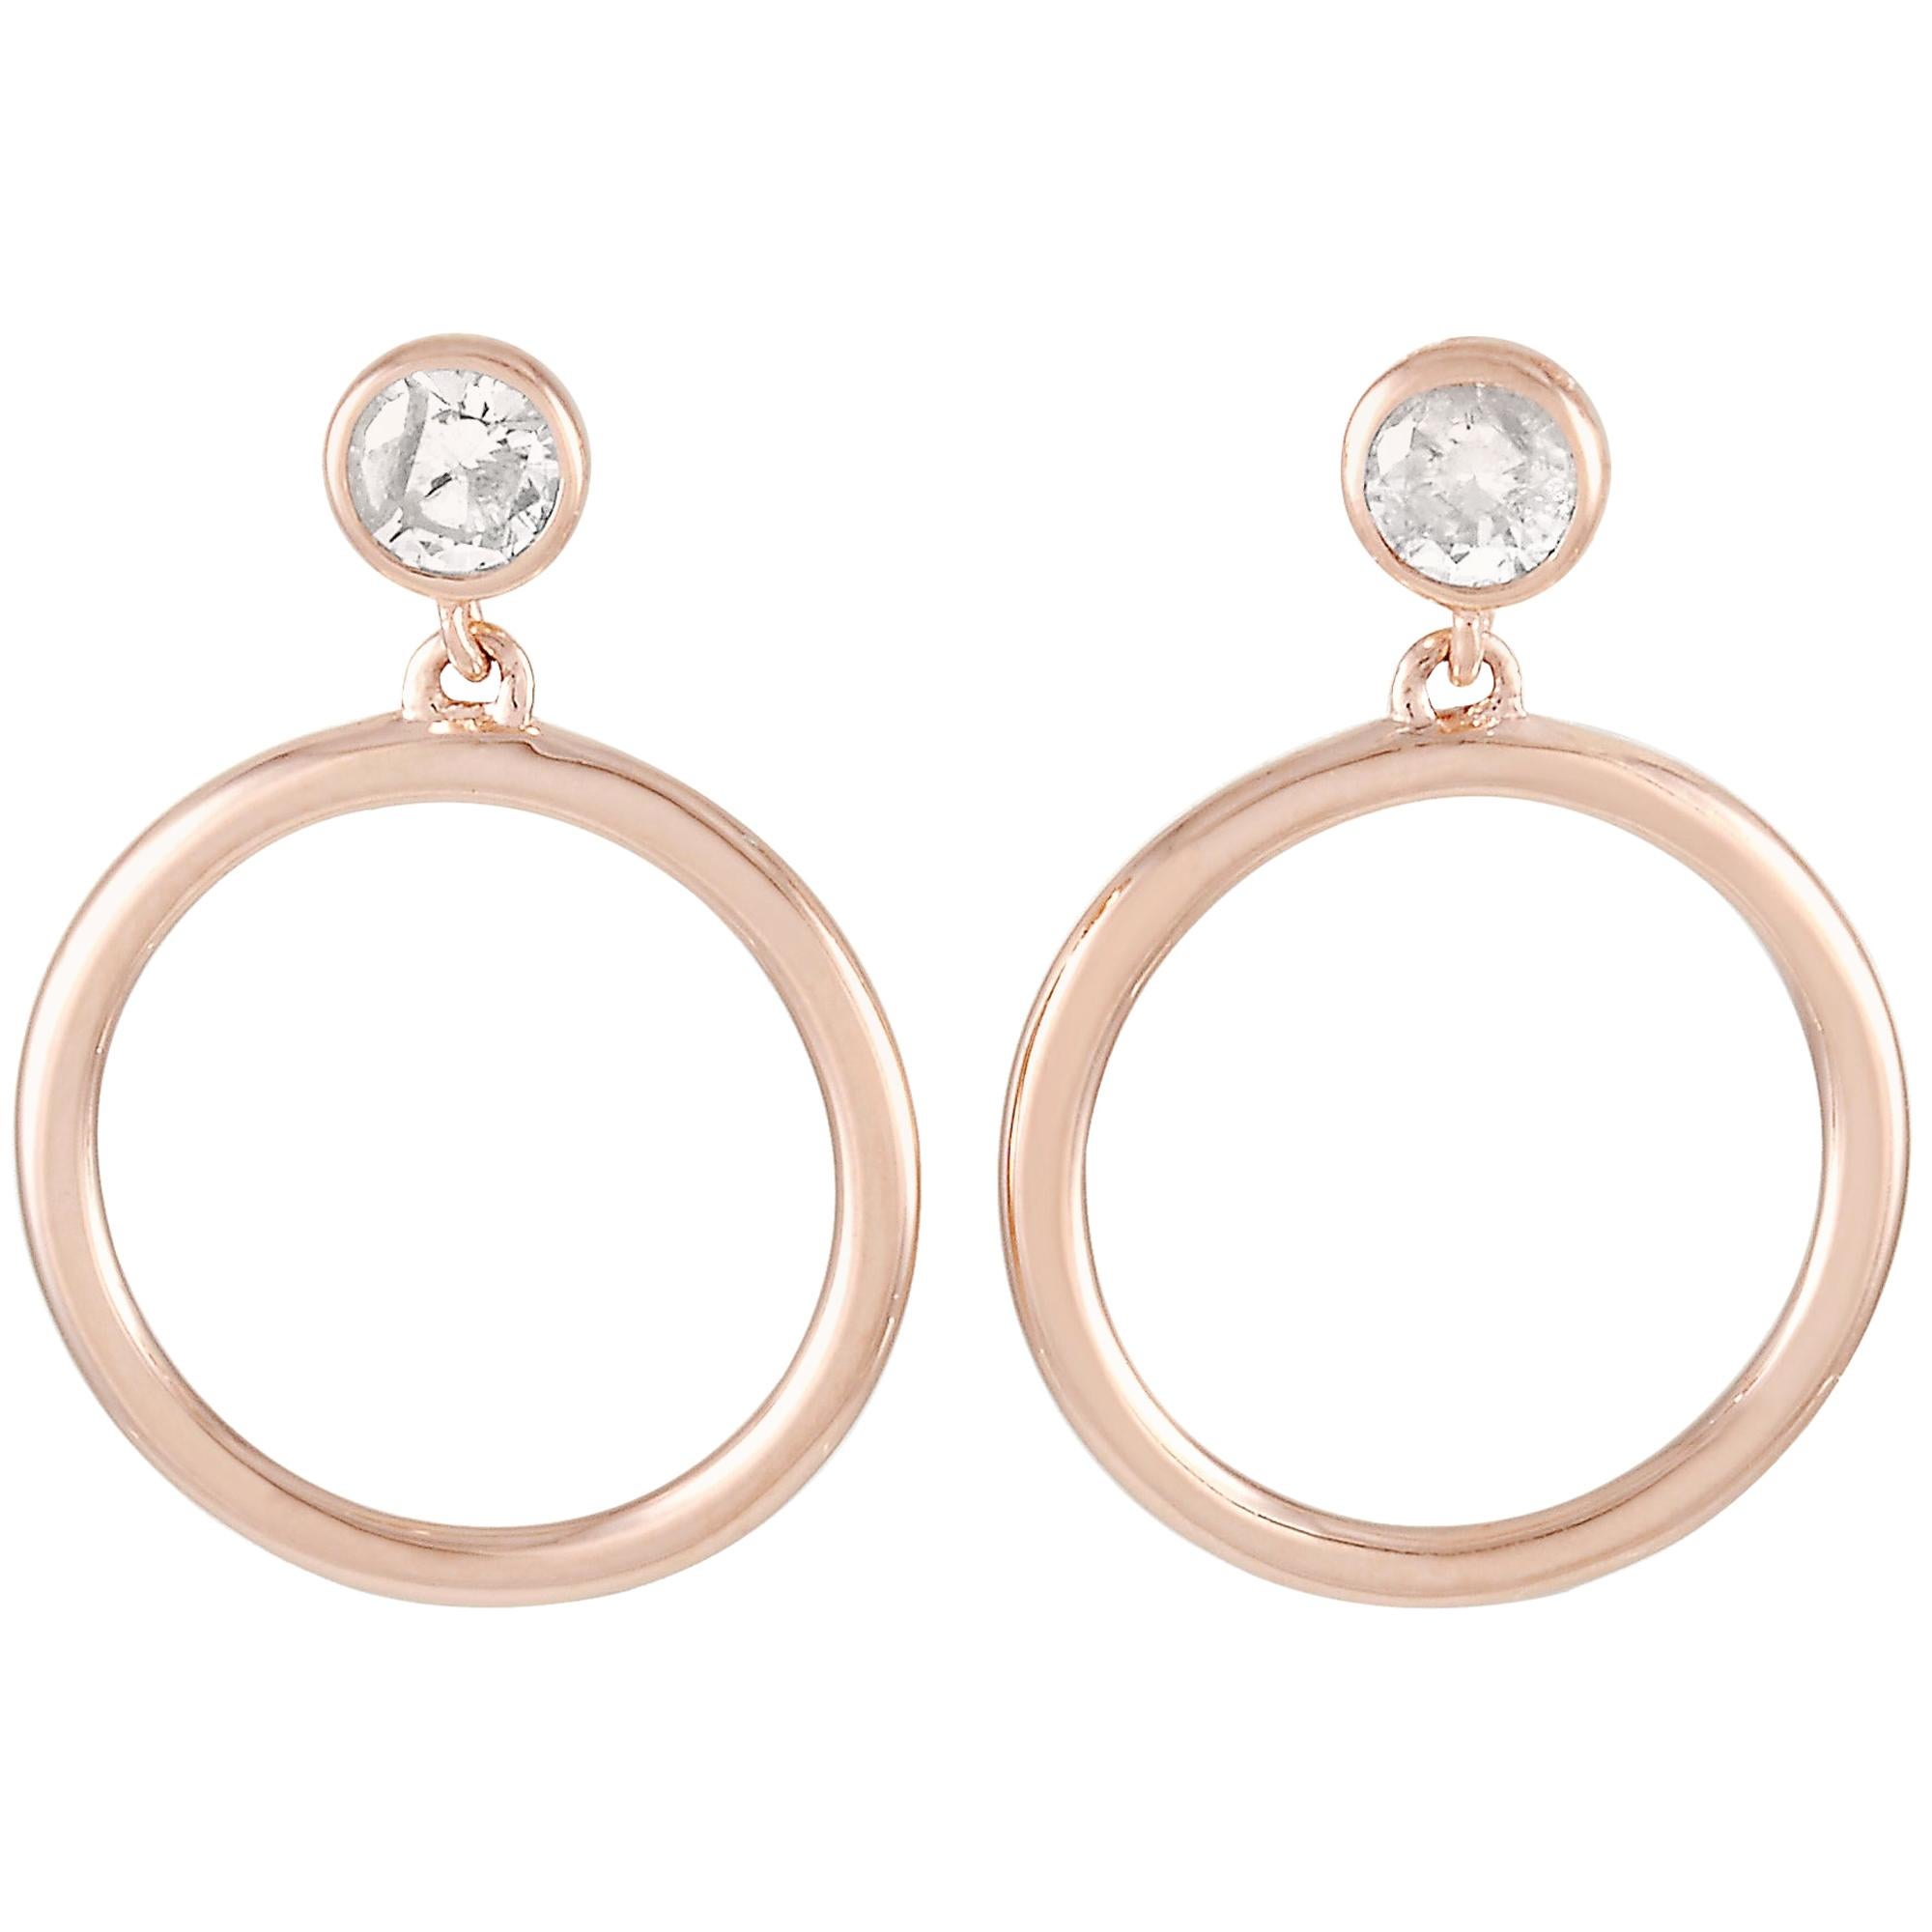 LB Exclusive 14 Karat Rose Gold 0.18 Carat Diamond Earrings